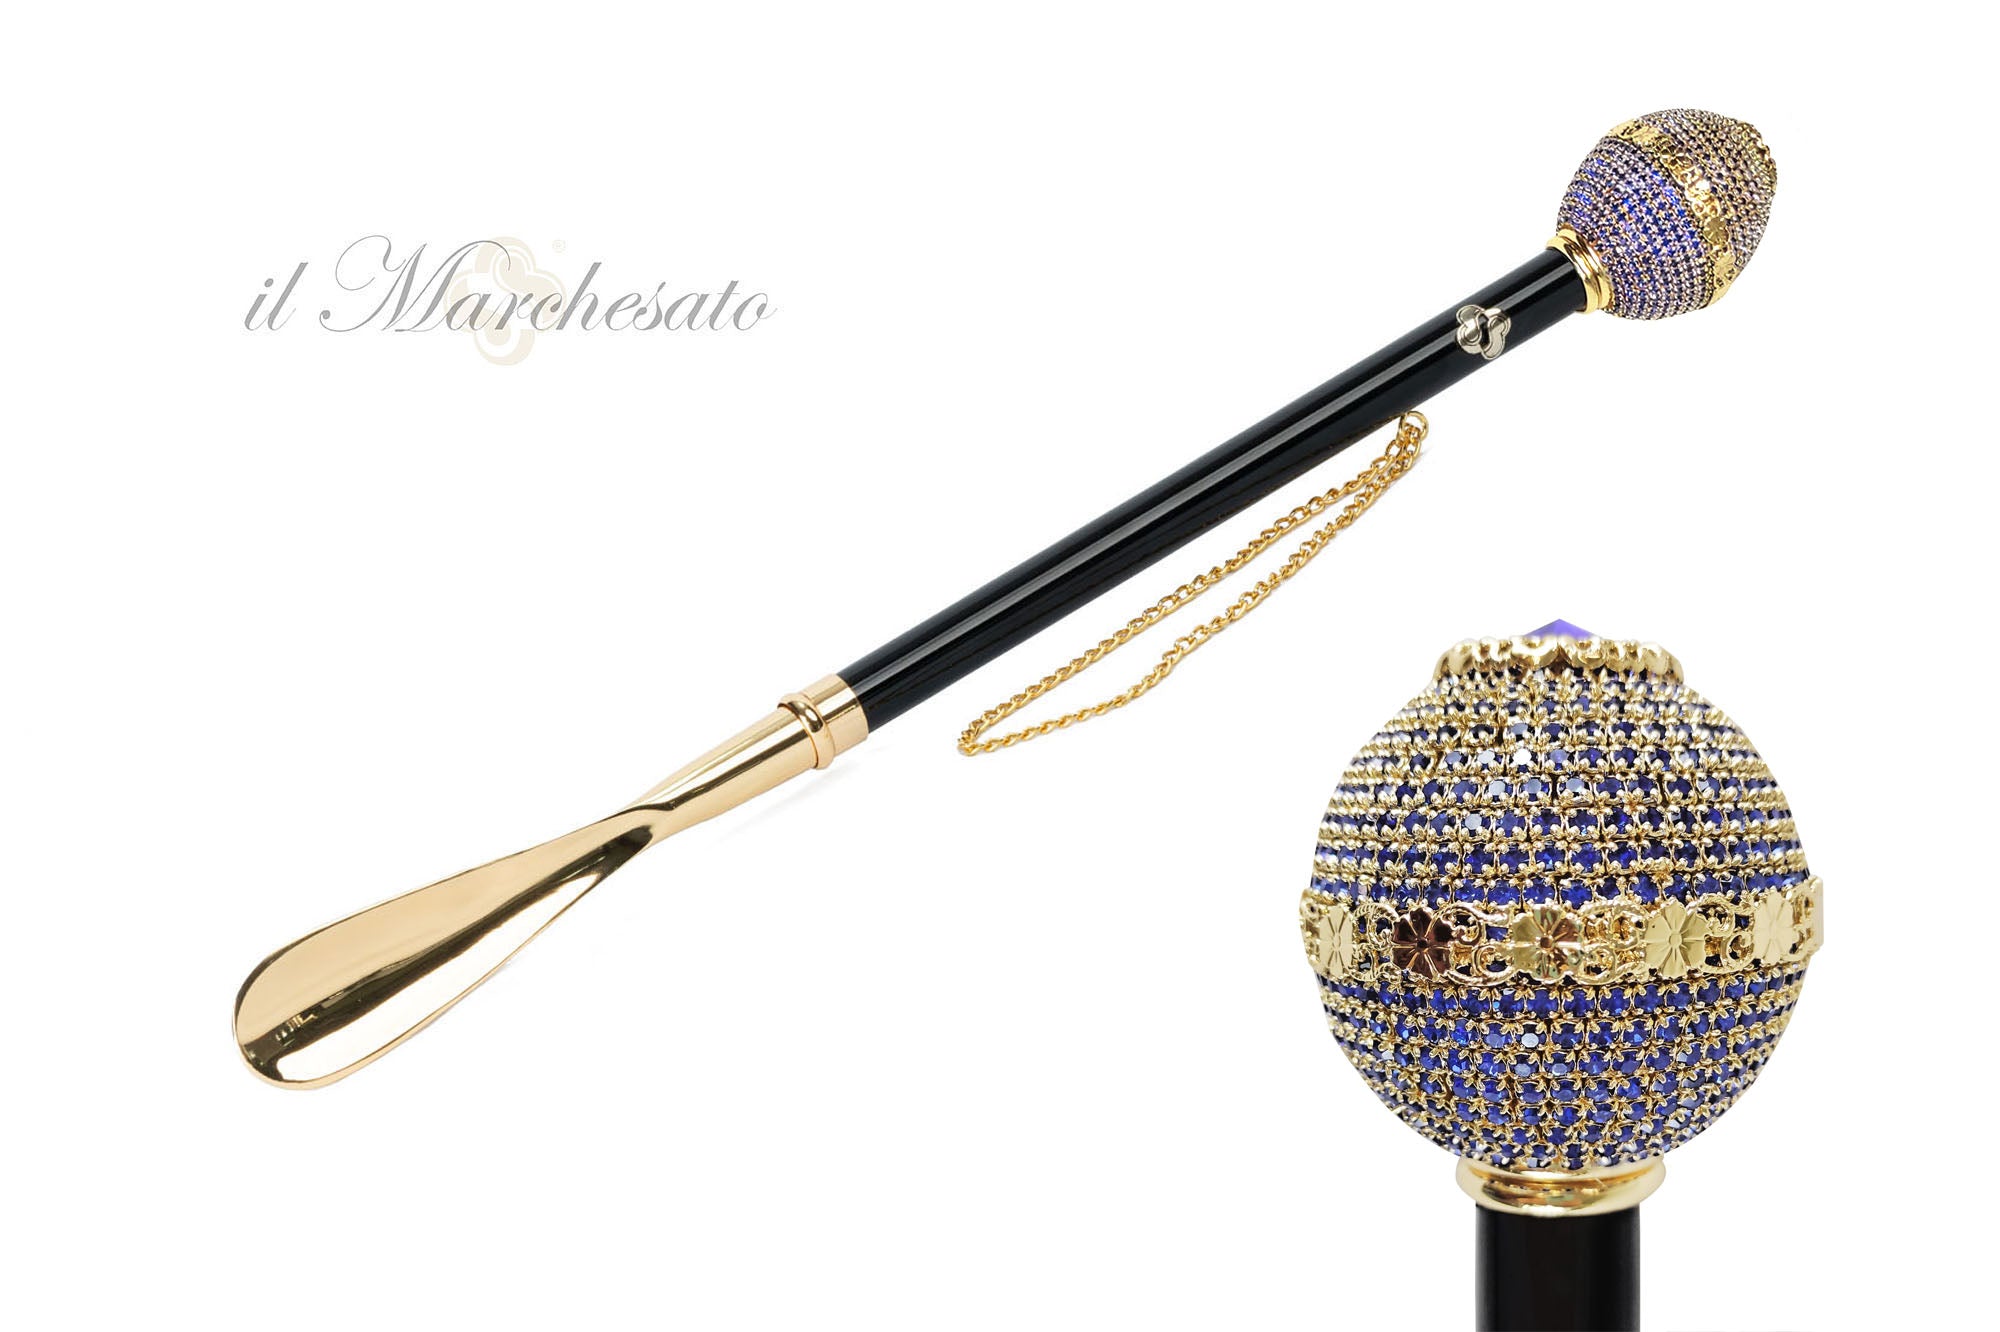 Luxury Italian Craftsmanship: Handmade Shoehorns with Sapphire crystals